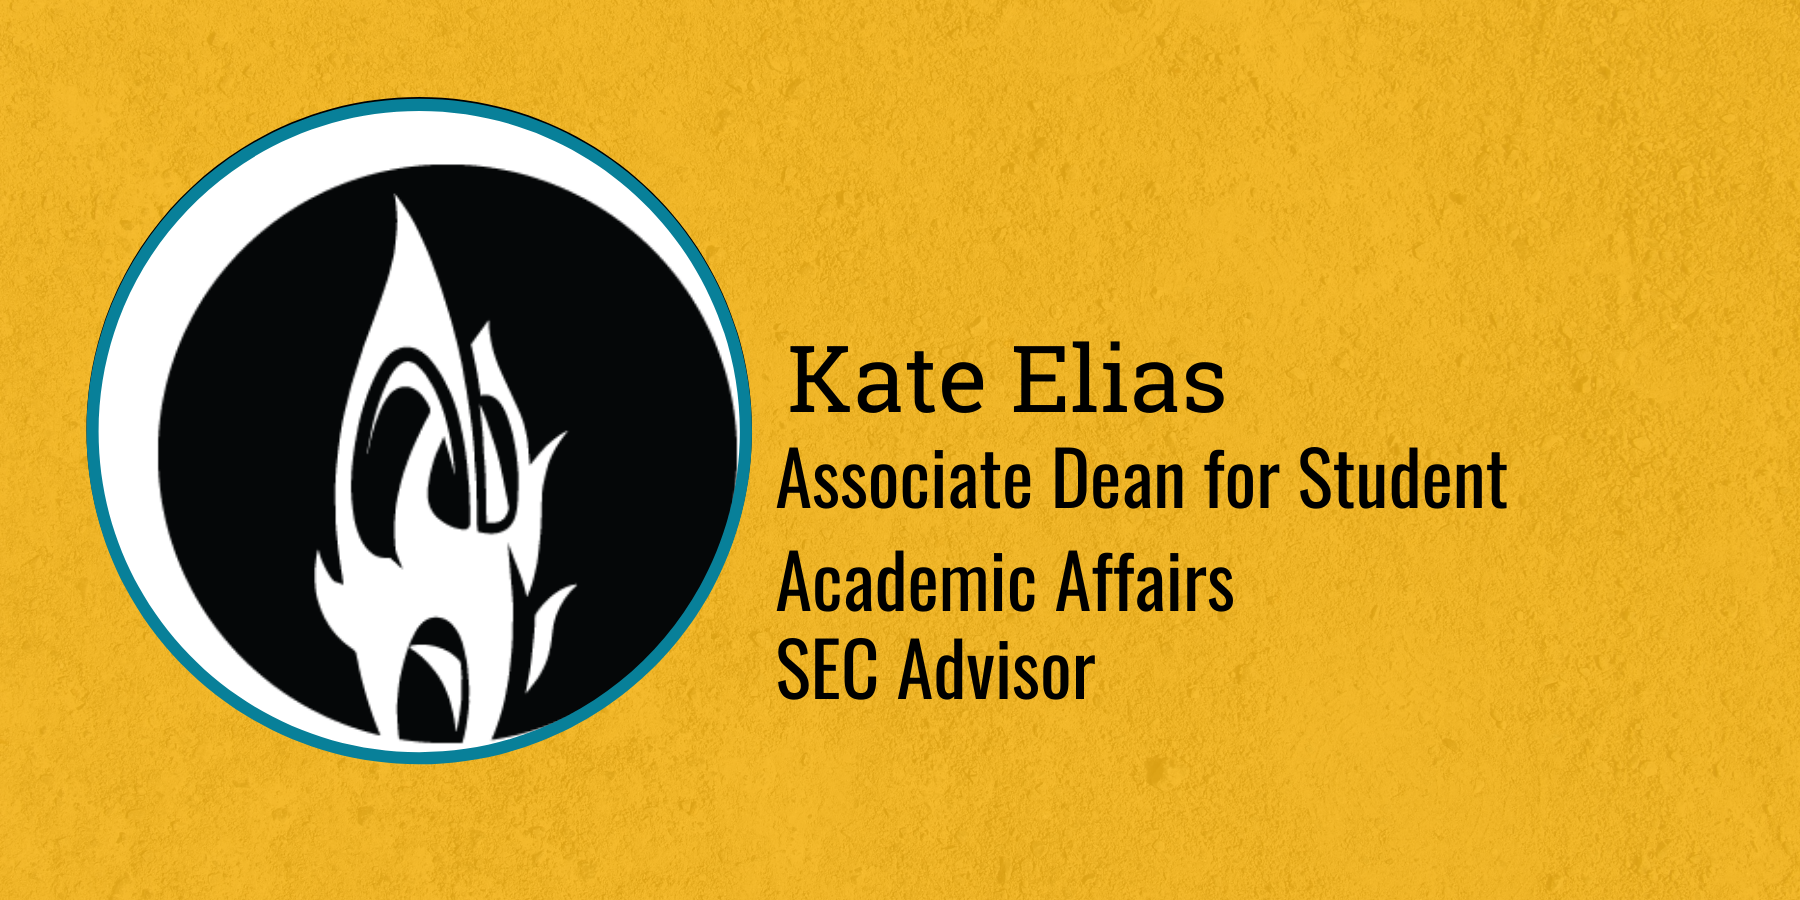 Kate Elias
Associate Dean for Student Academic Affairs
SEC Advisor 